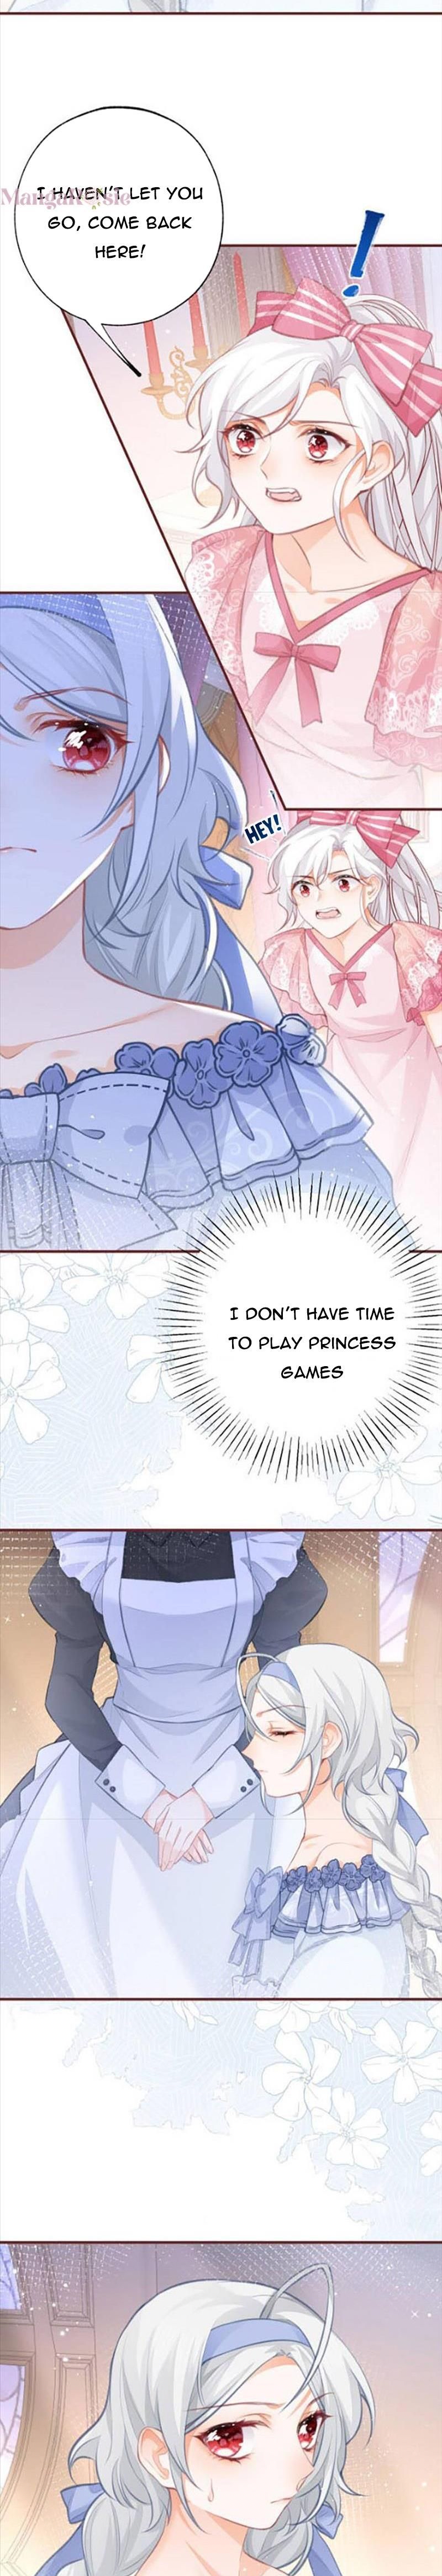 I Became The Sacrificial Princess chapter 23